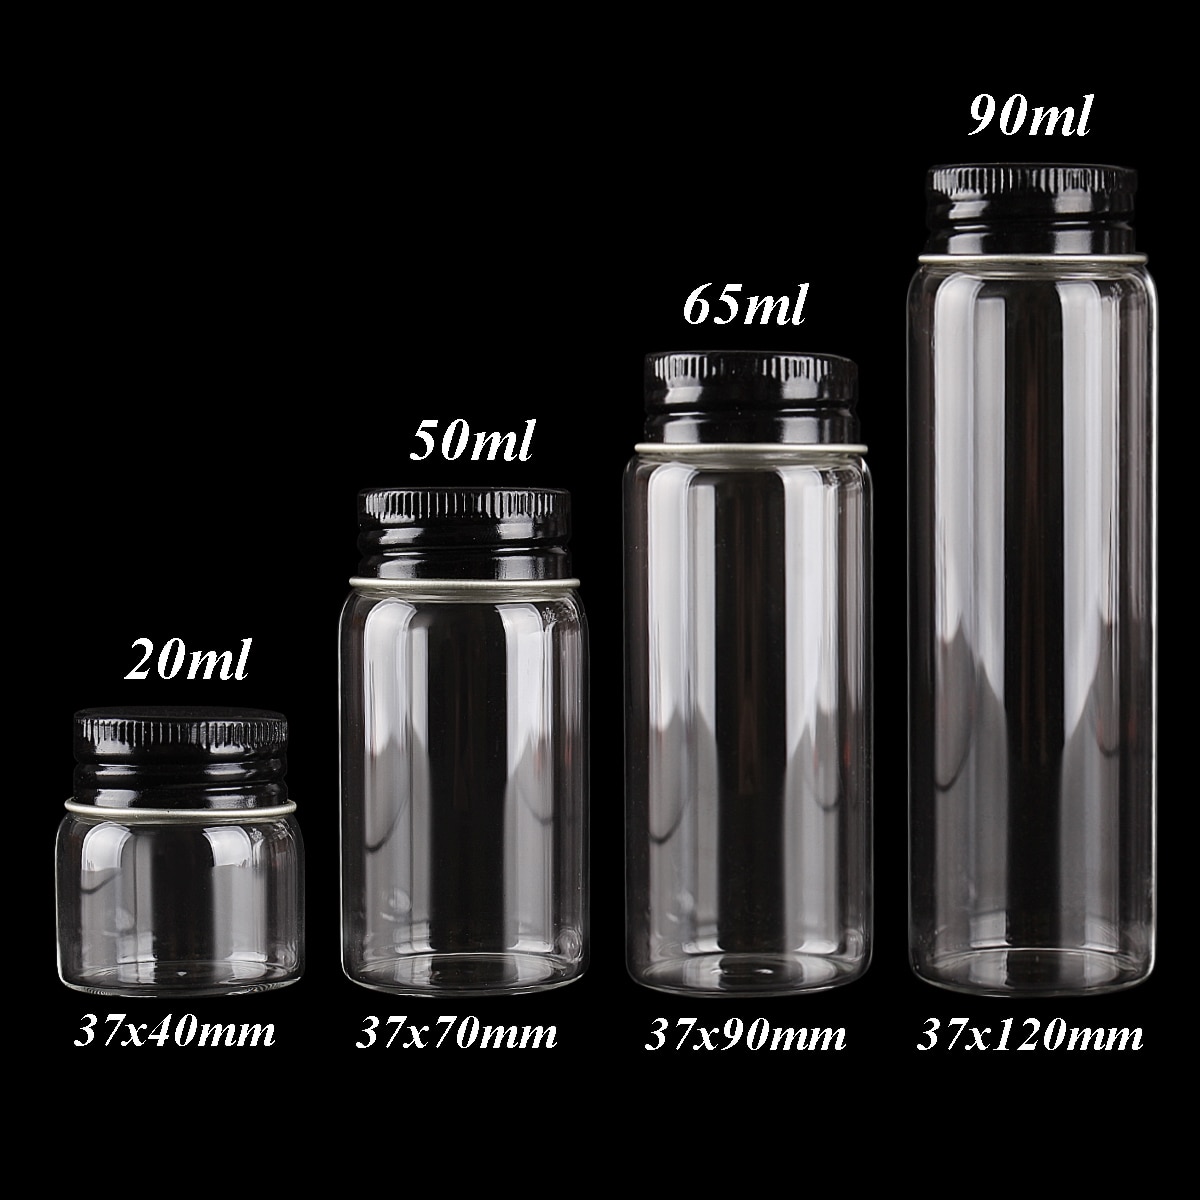 20 Ml 50 Ml 65 Ml 90 Ml Glazen Flessen Met Zwarte Aluminium Deksels Diameter 37 Mm Glazen Flessen 15 stuks